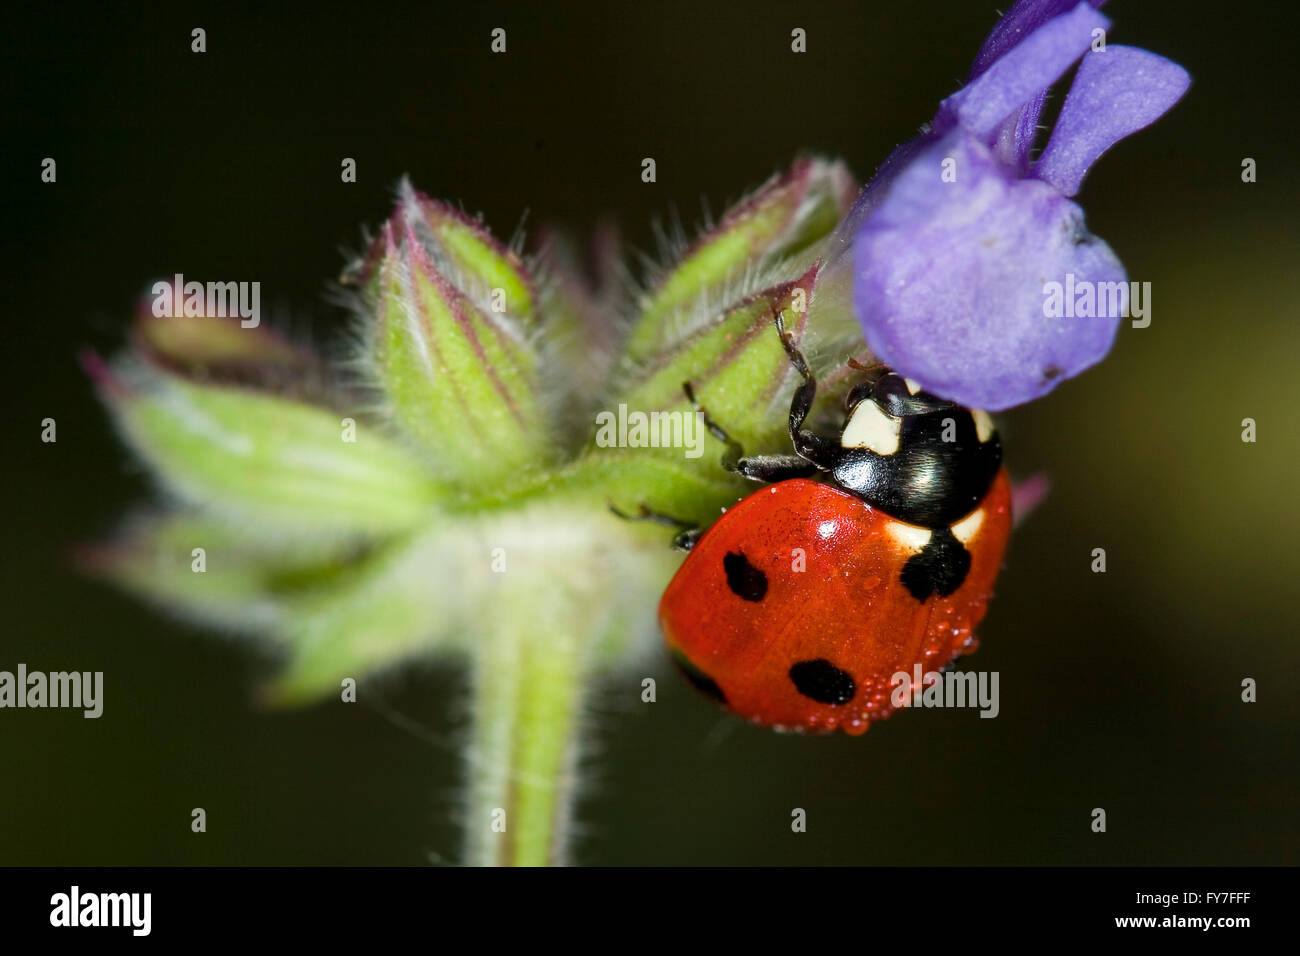 A ladybug, Coccinella septempunctata. Stock Photo